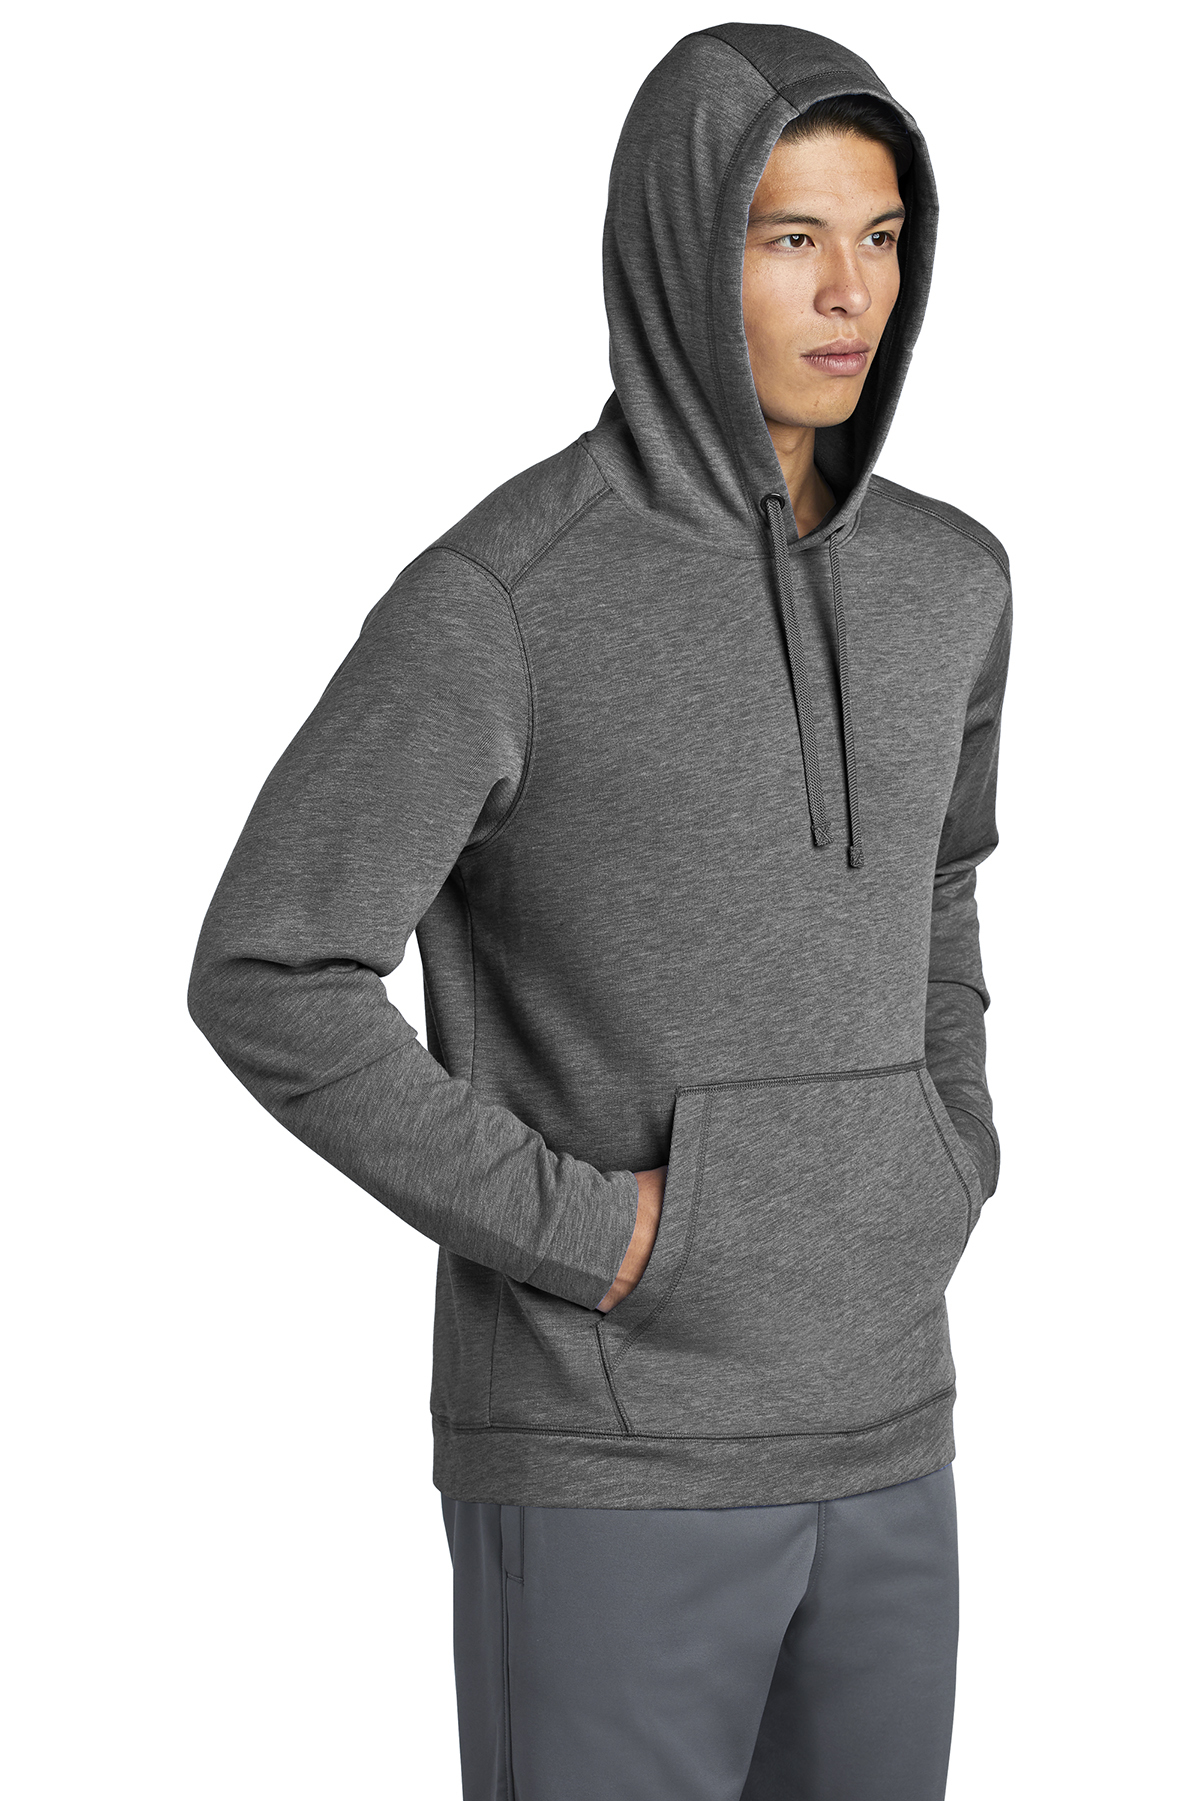 Sport-Tek PosiCharge Tri-Blend Wicking Fleece Hooded Pullover | Product ...